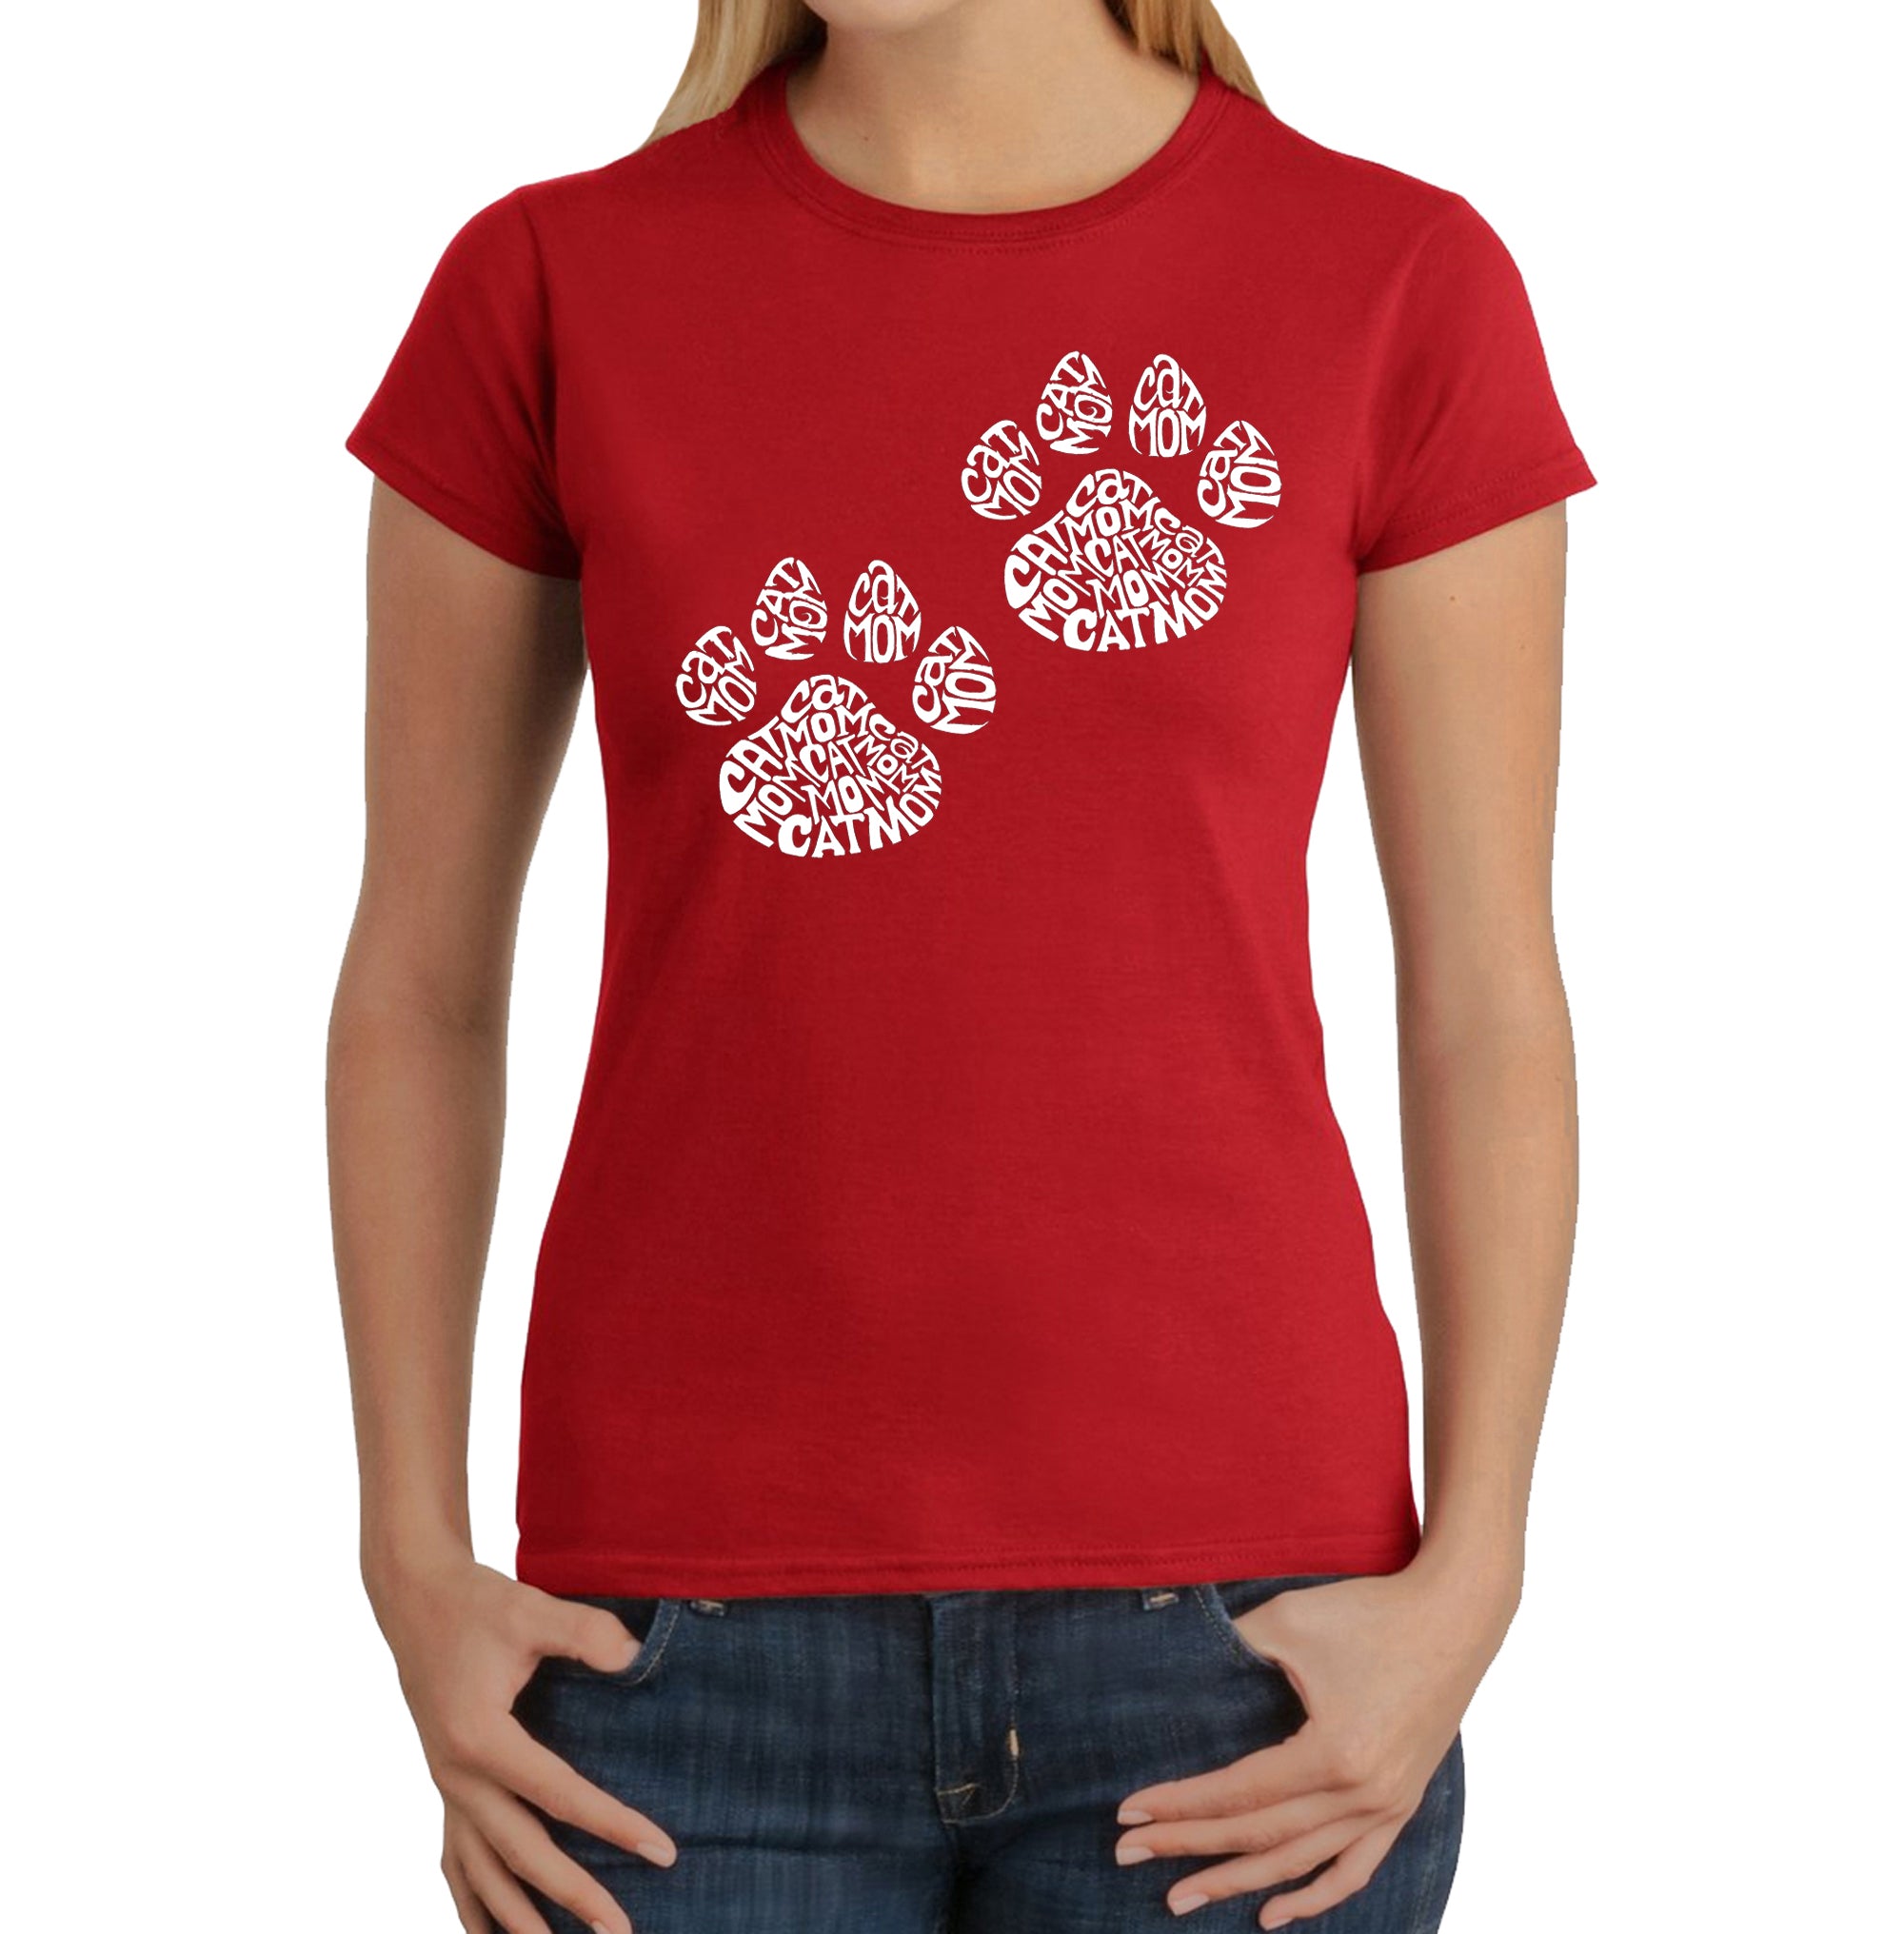 Cat Mom - Women's Word Art T-Shirt - Red - XX-Large